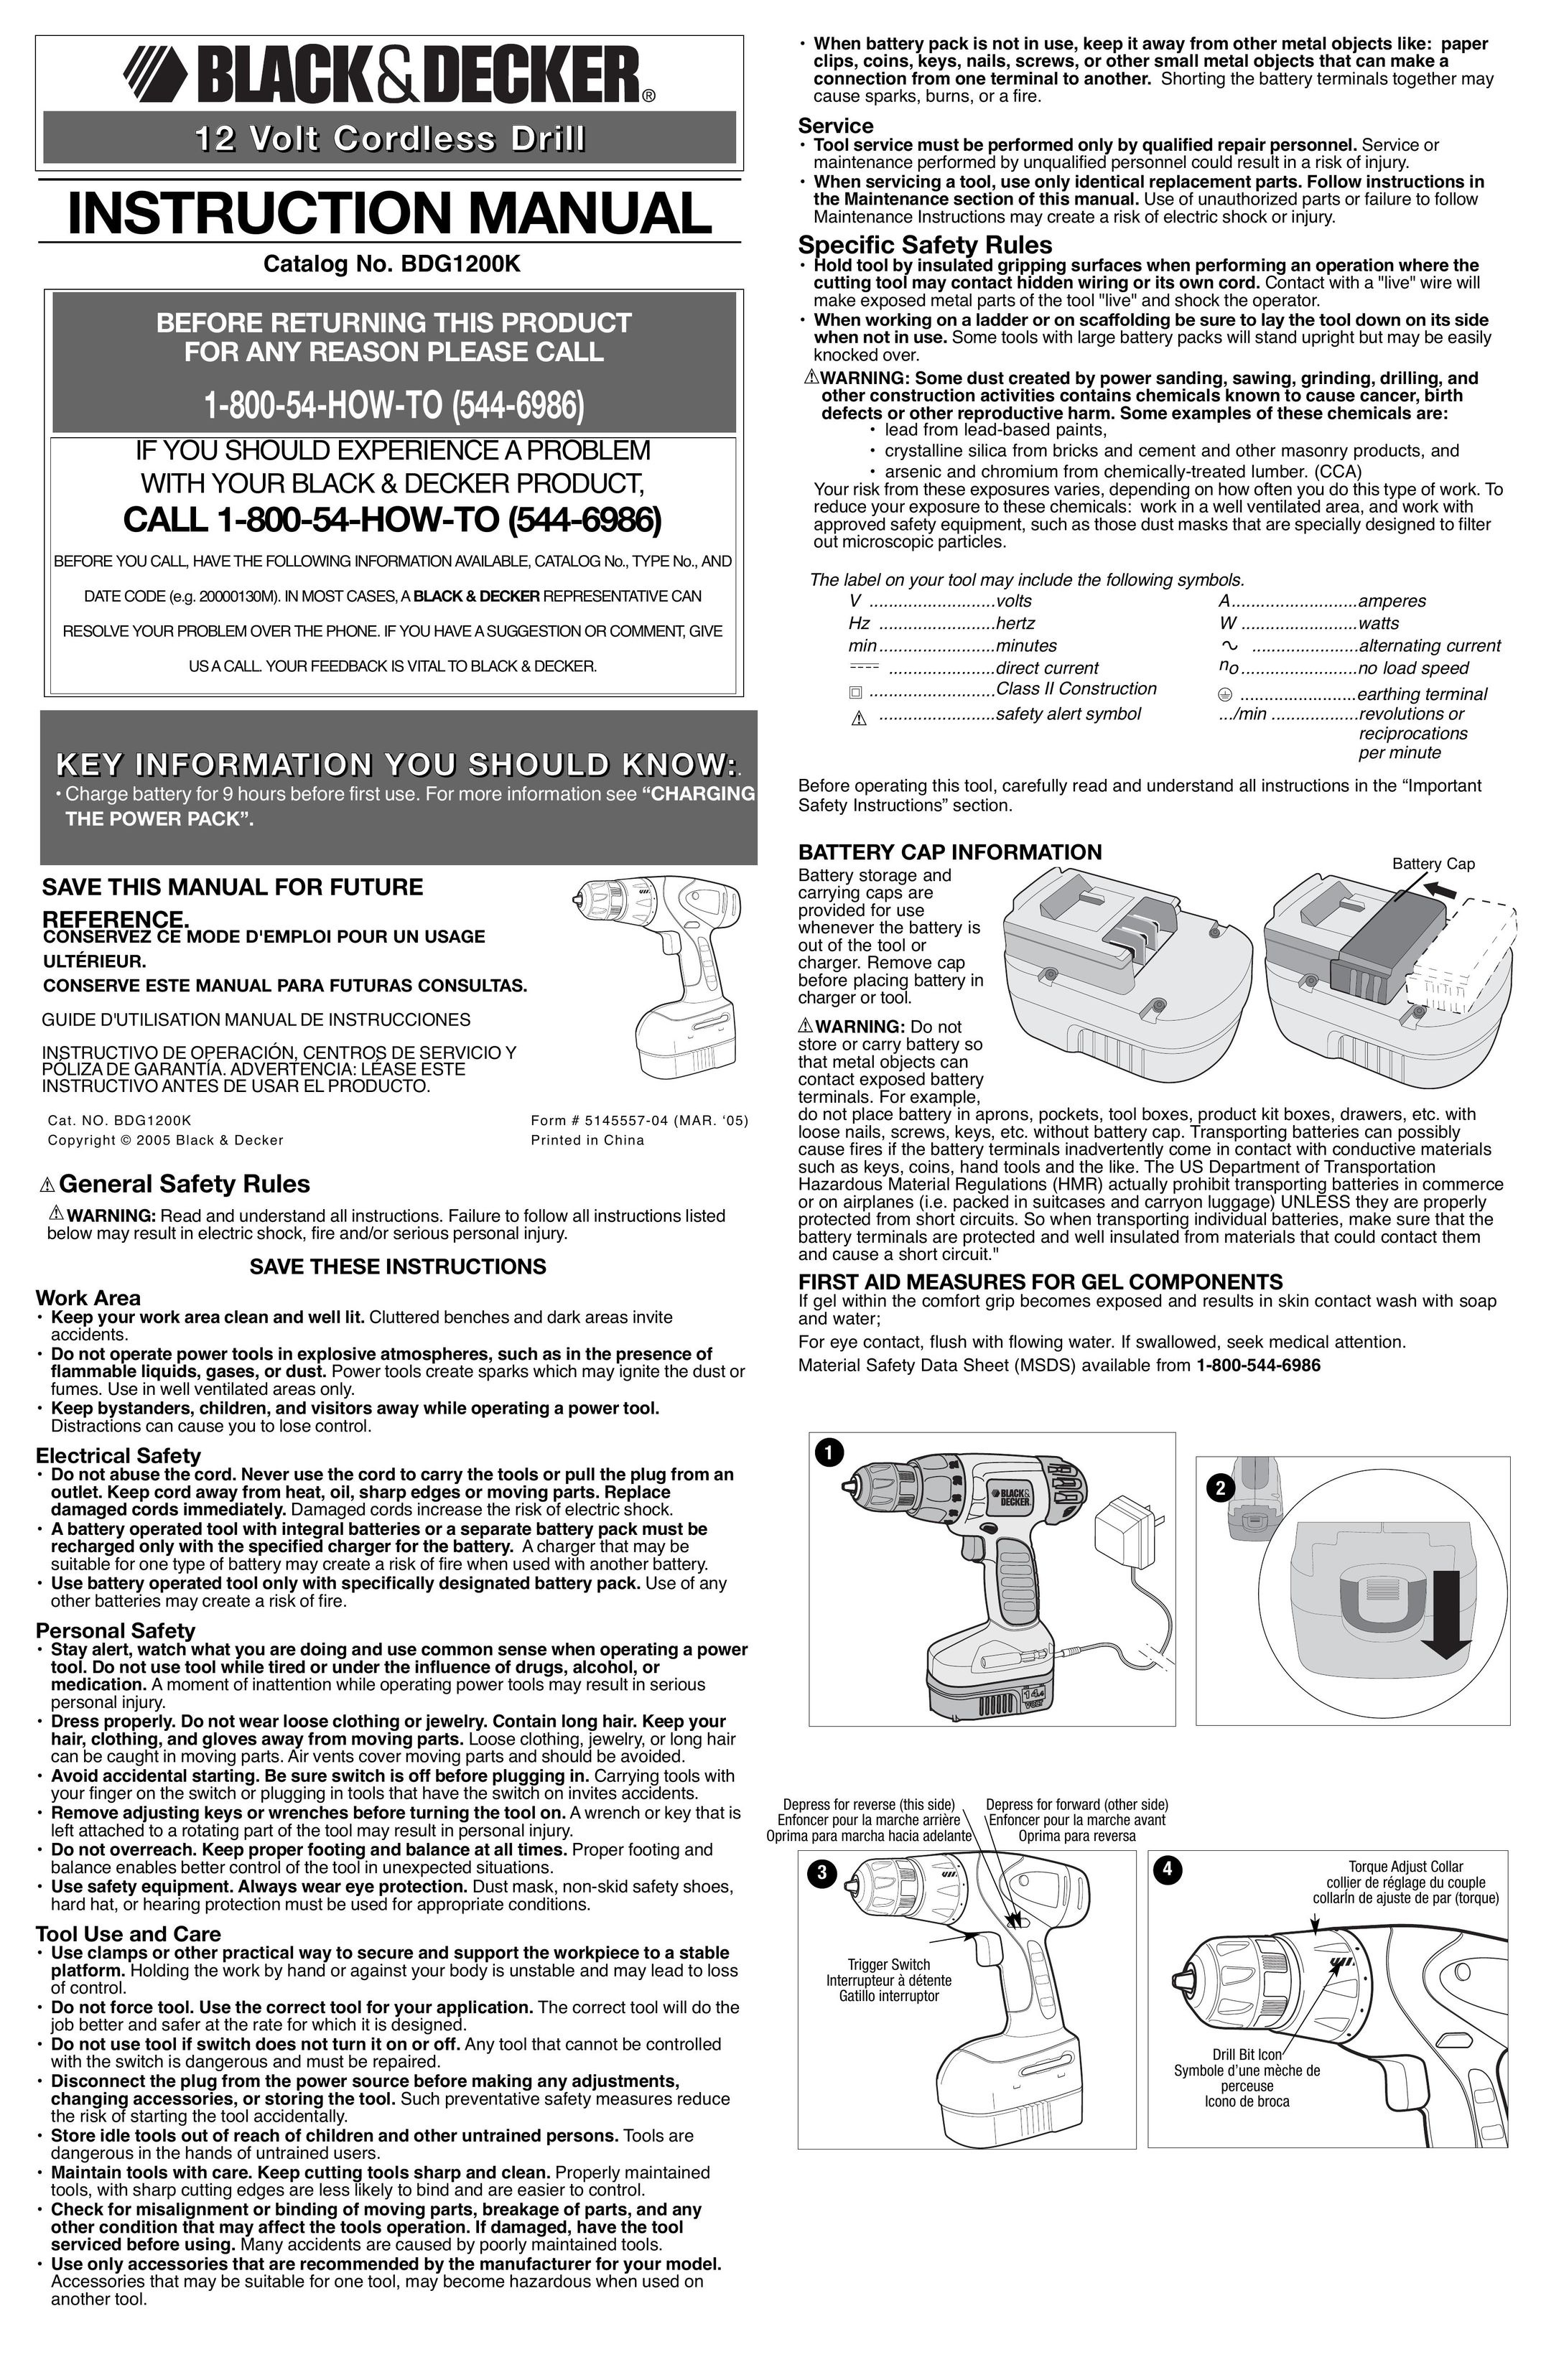 Black & Decker 5145557-04 Cordless Drill User Manual